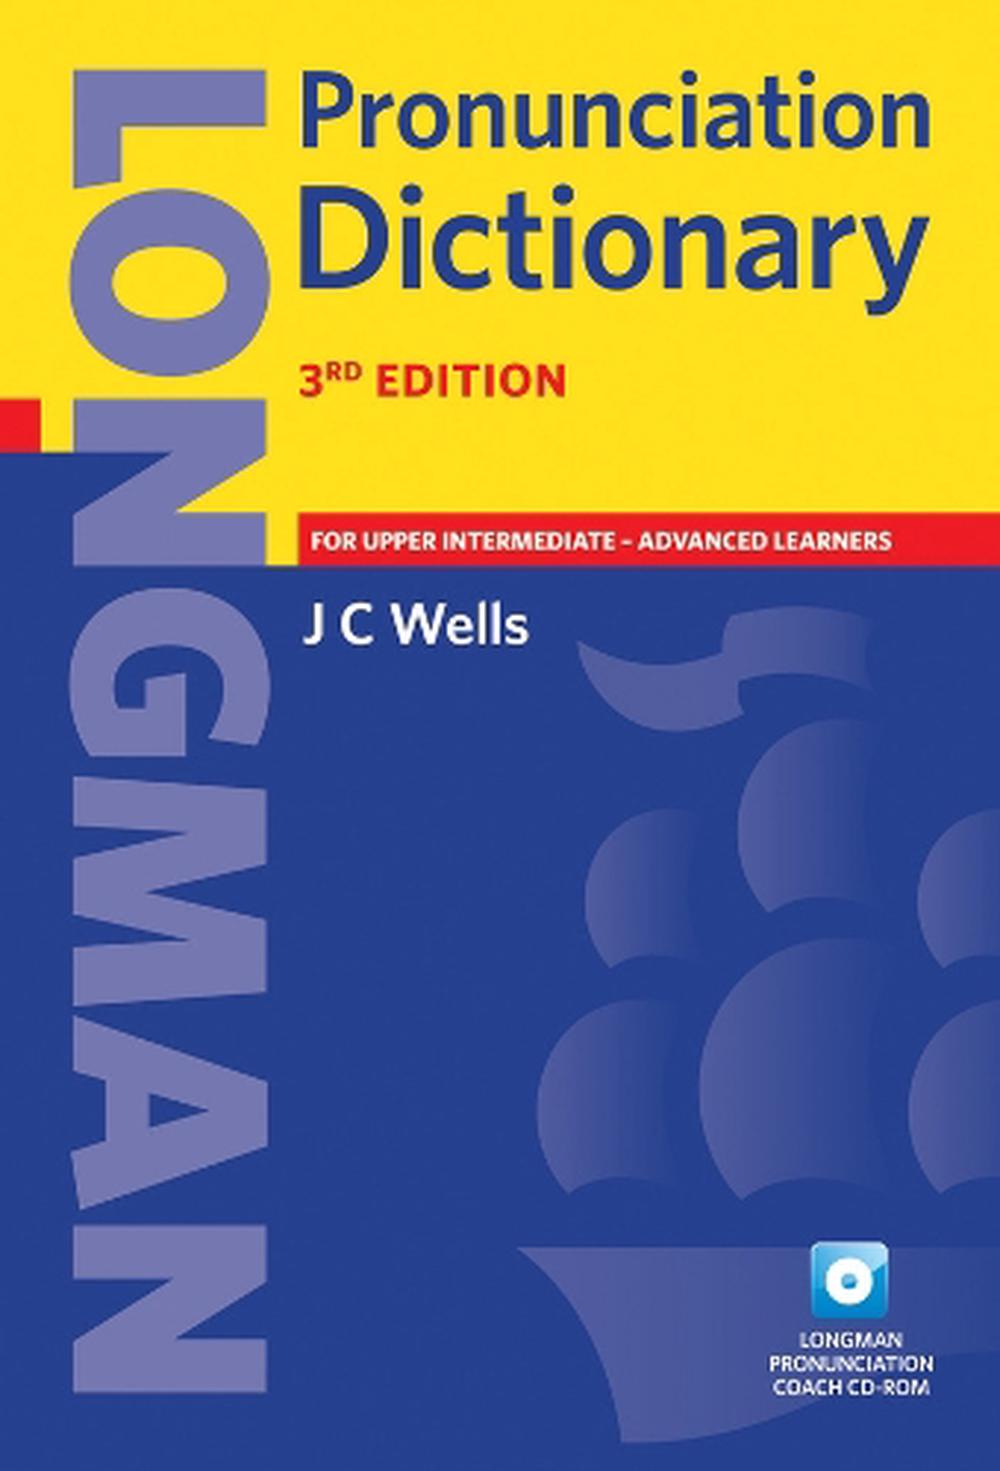 longman pronunciation dictionary wells